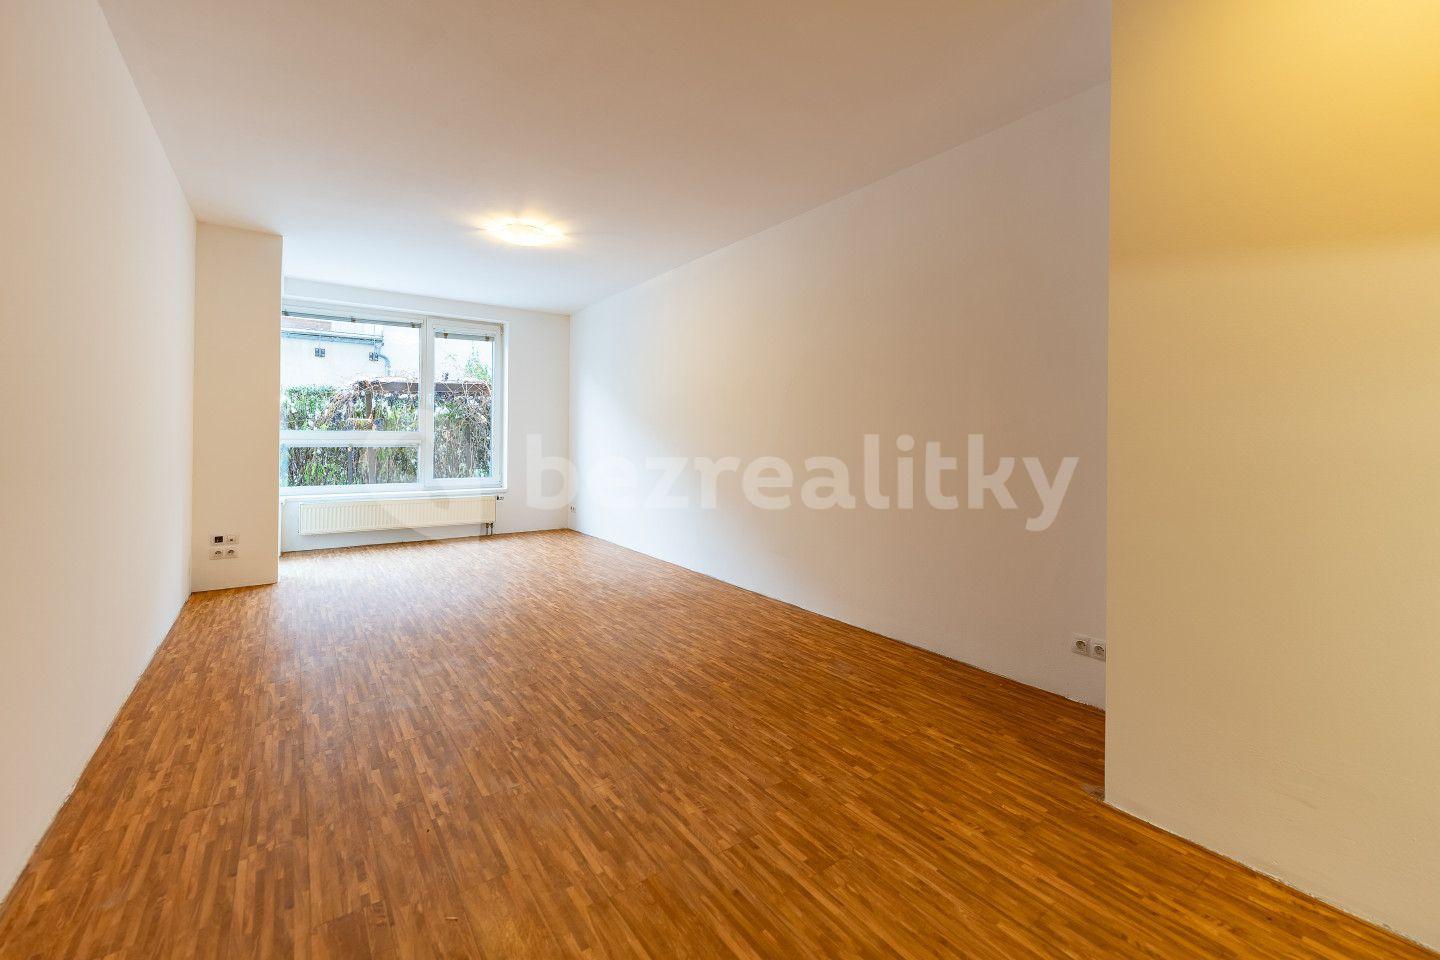 1 bedroom with open-plan kitchen flat for sale, 54 m², Pod Harfou, Prague, Prague